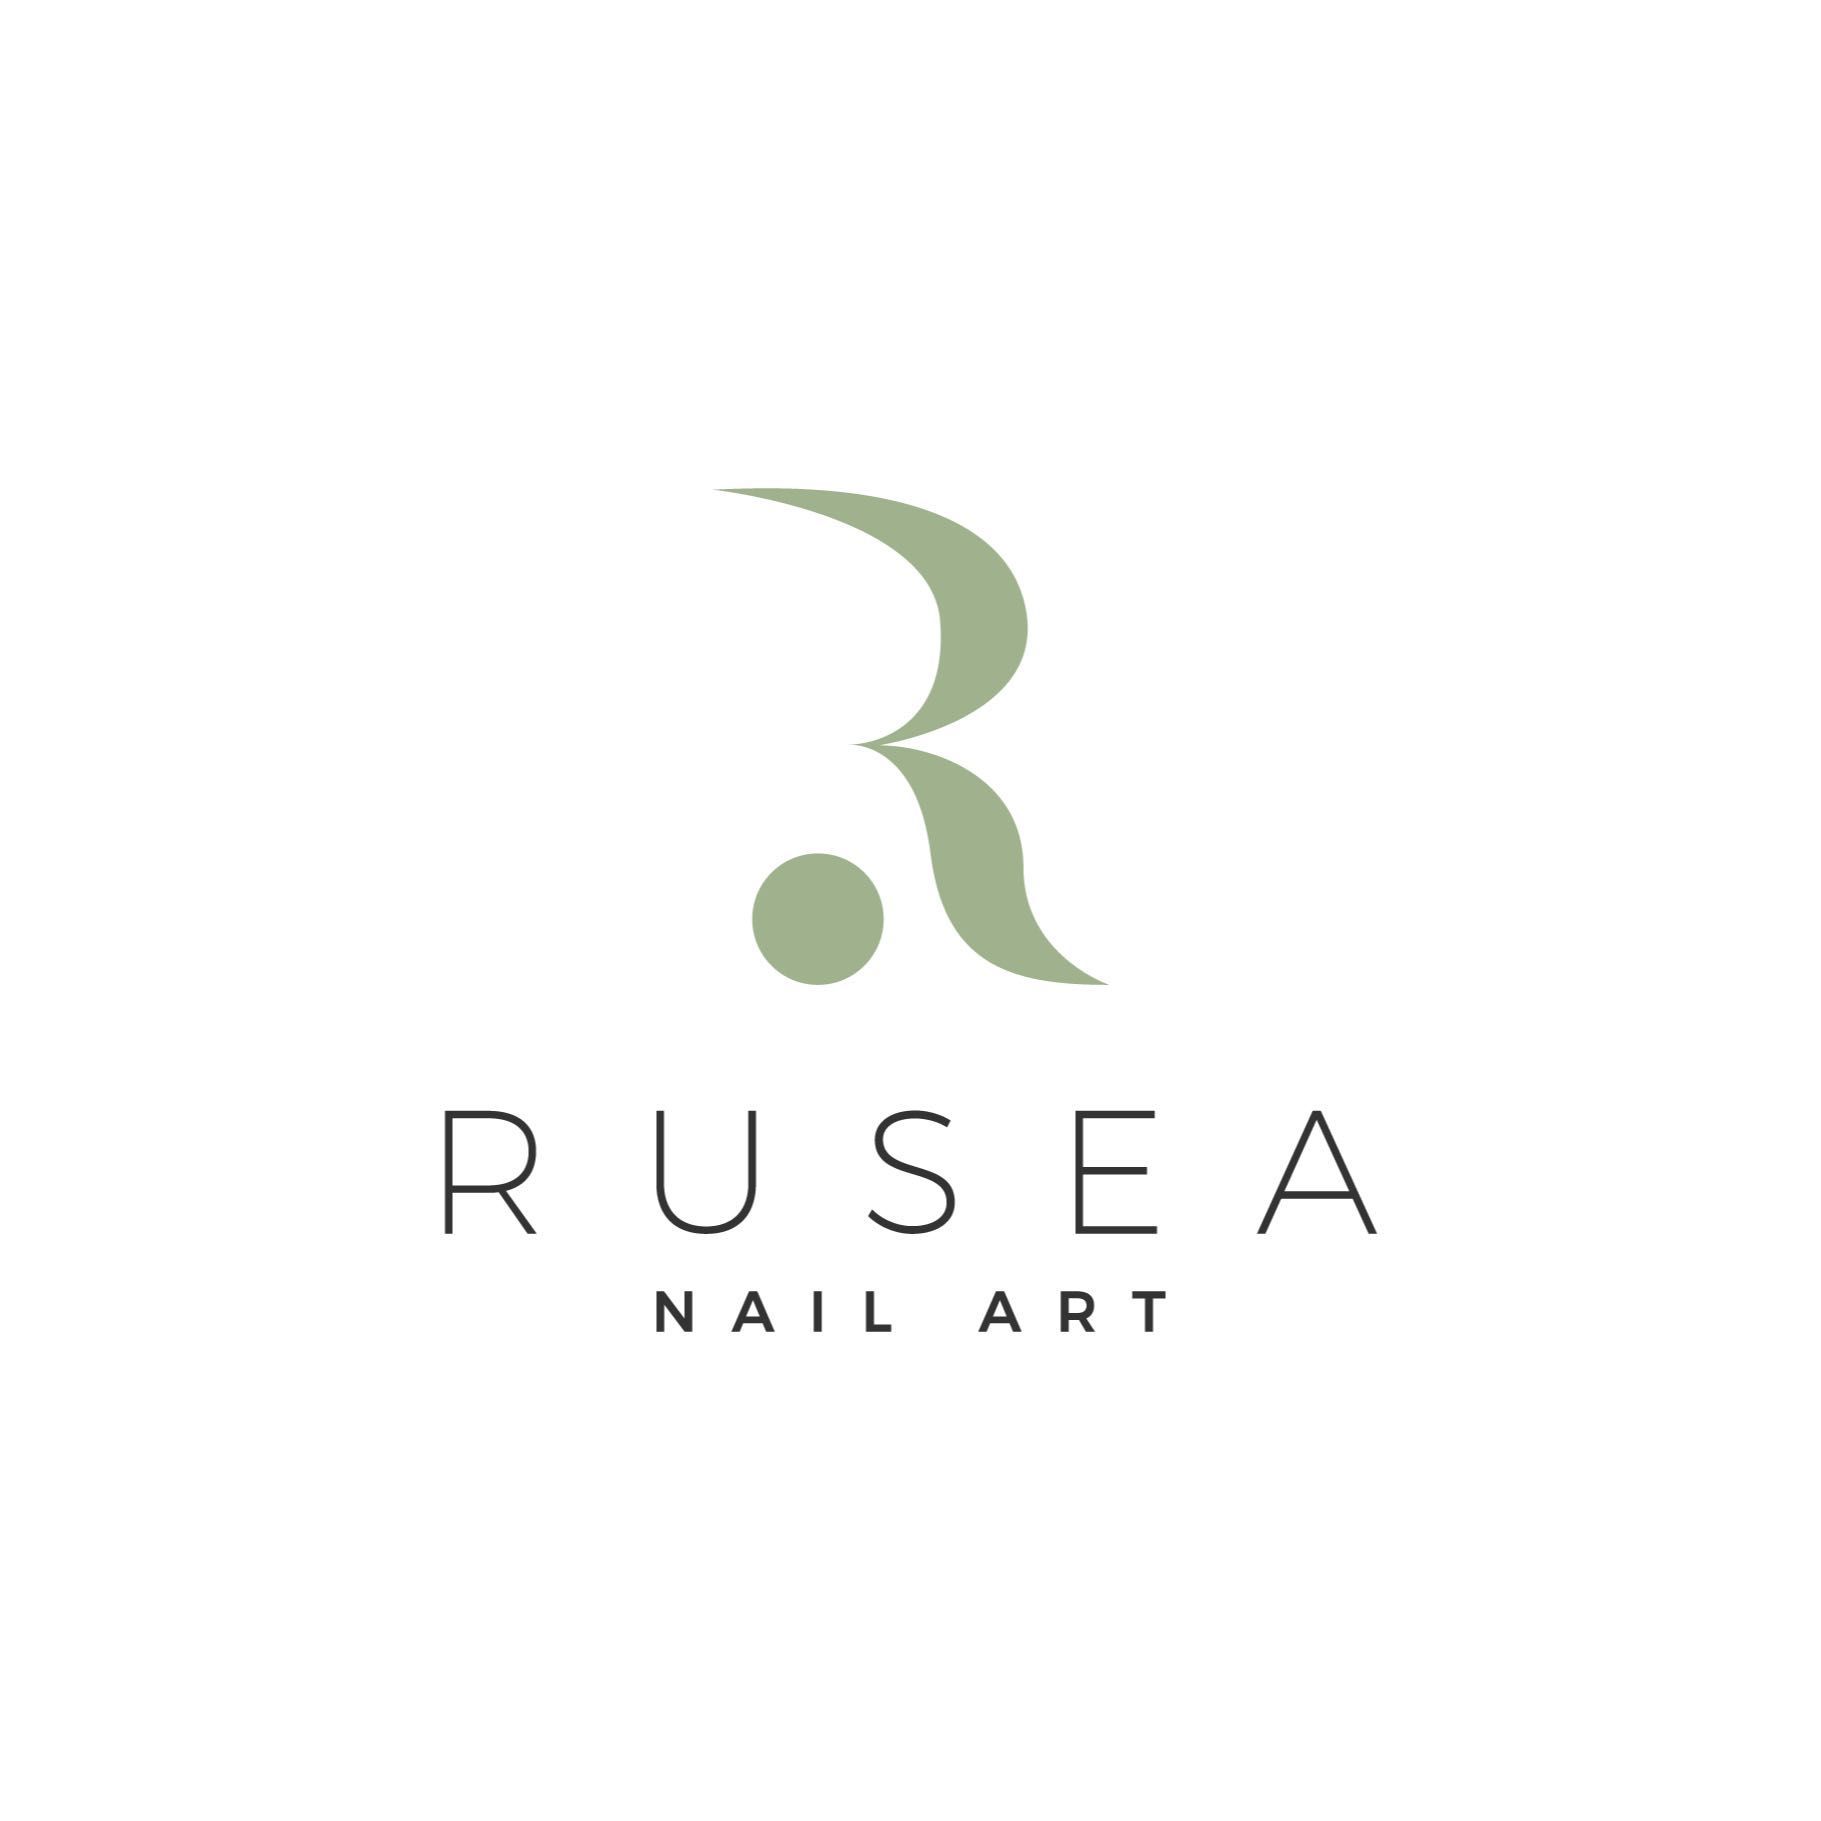 Rusea Nail Art, Cathcart Road, 1119, G42 9BD, Glasgow